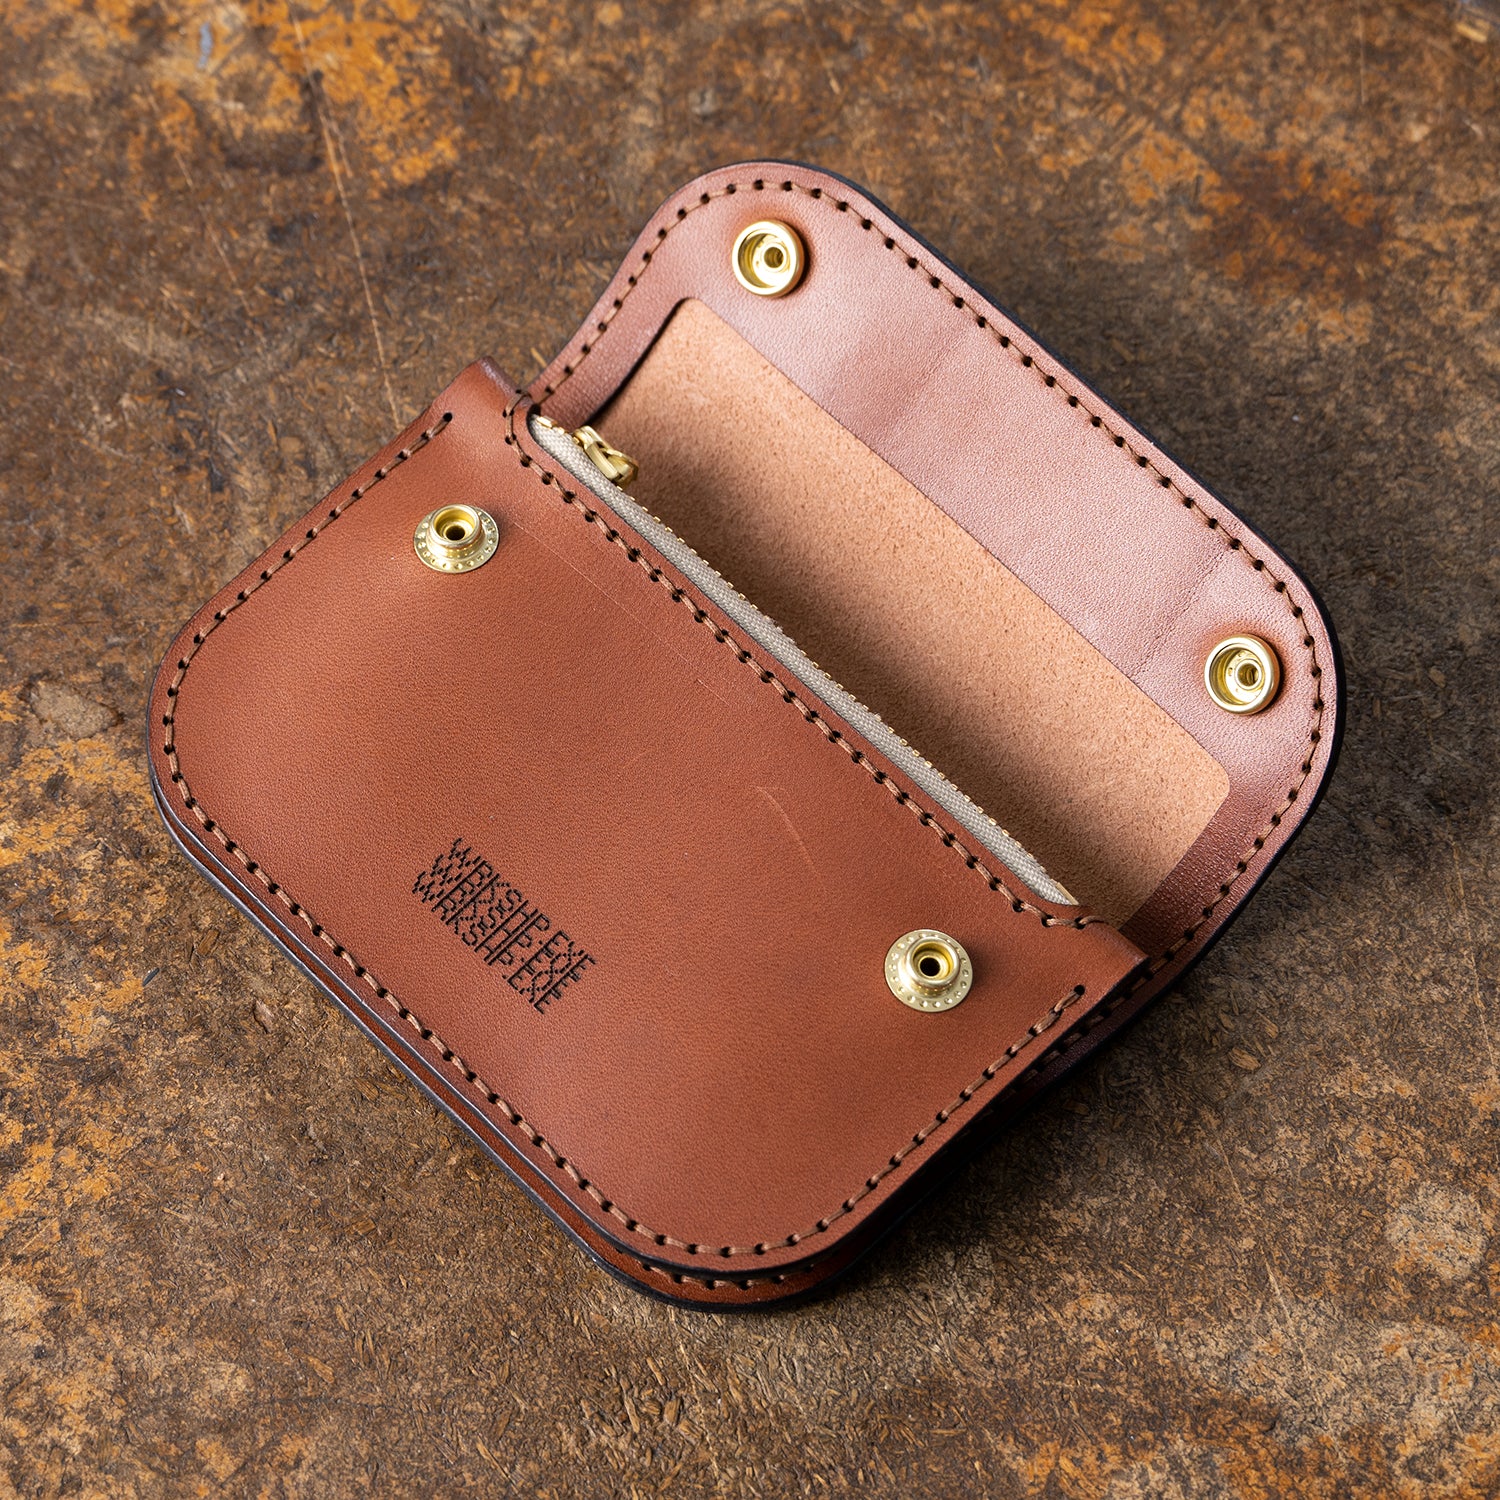 Biker/Trucker Wallet Template Set – Maker's Leather Supply